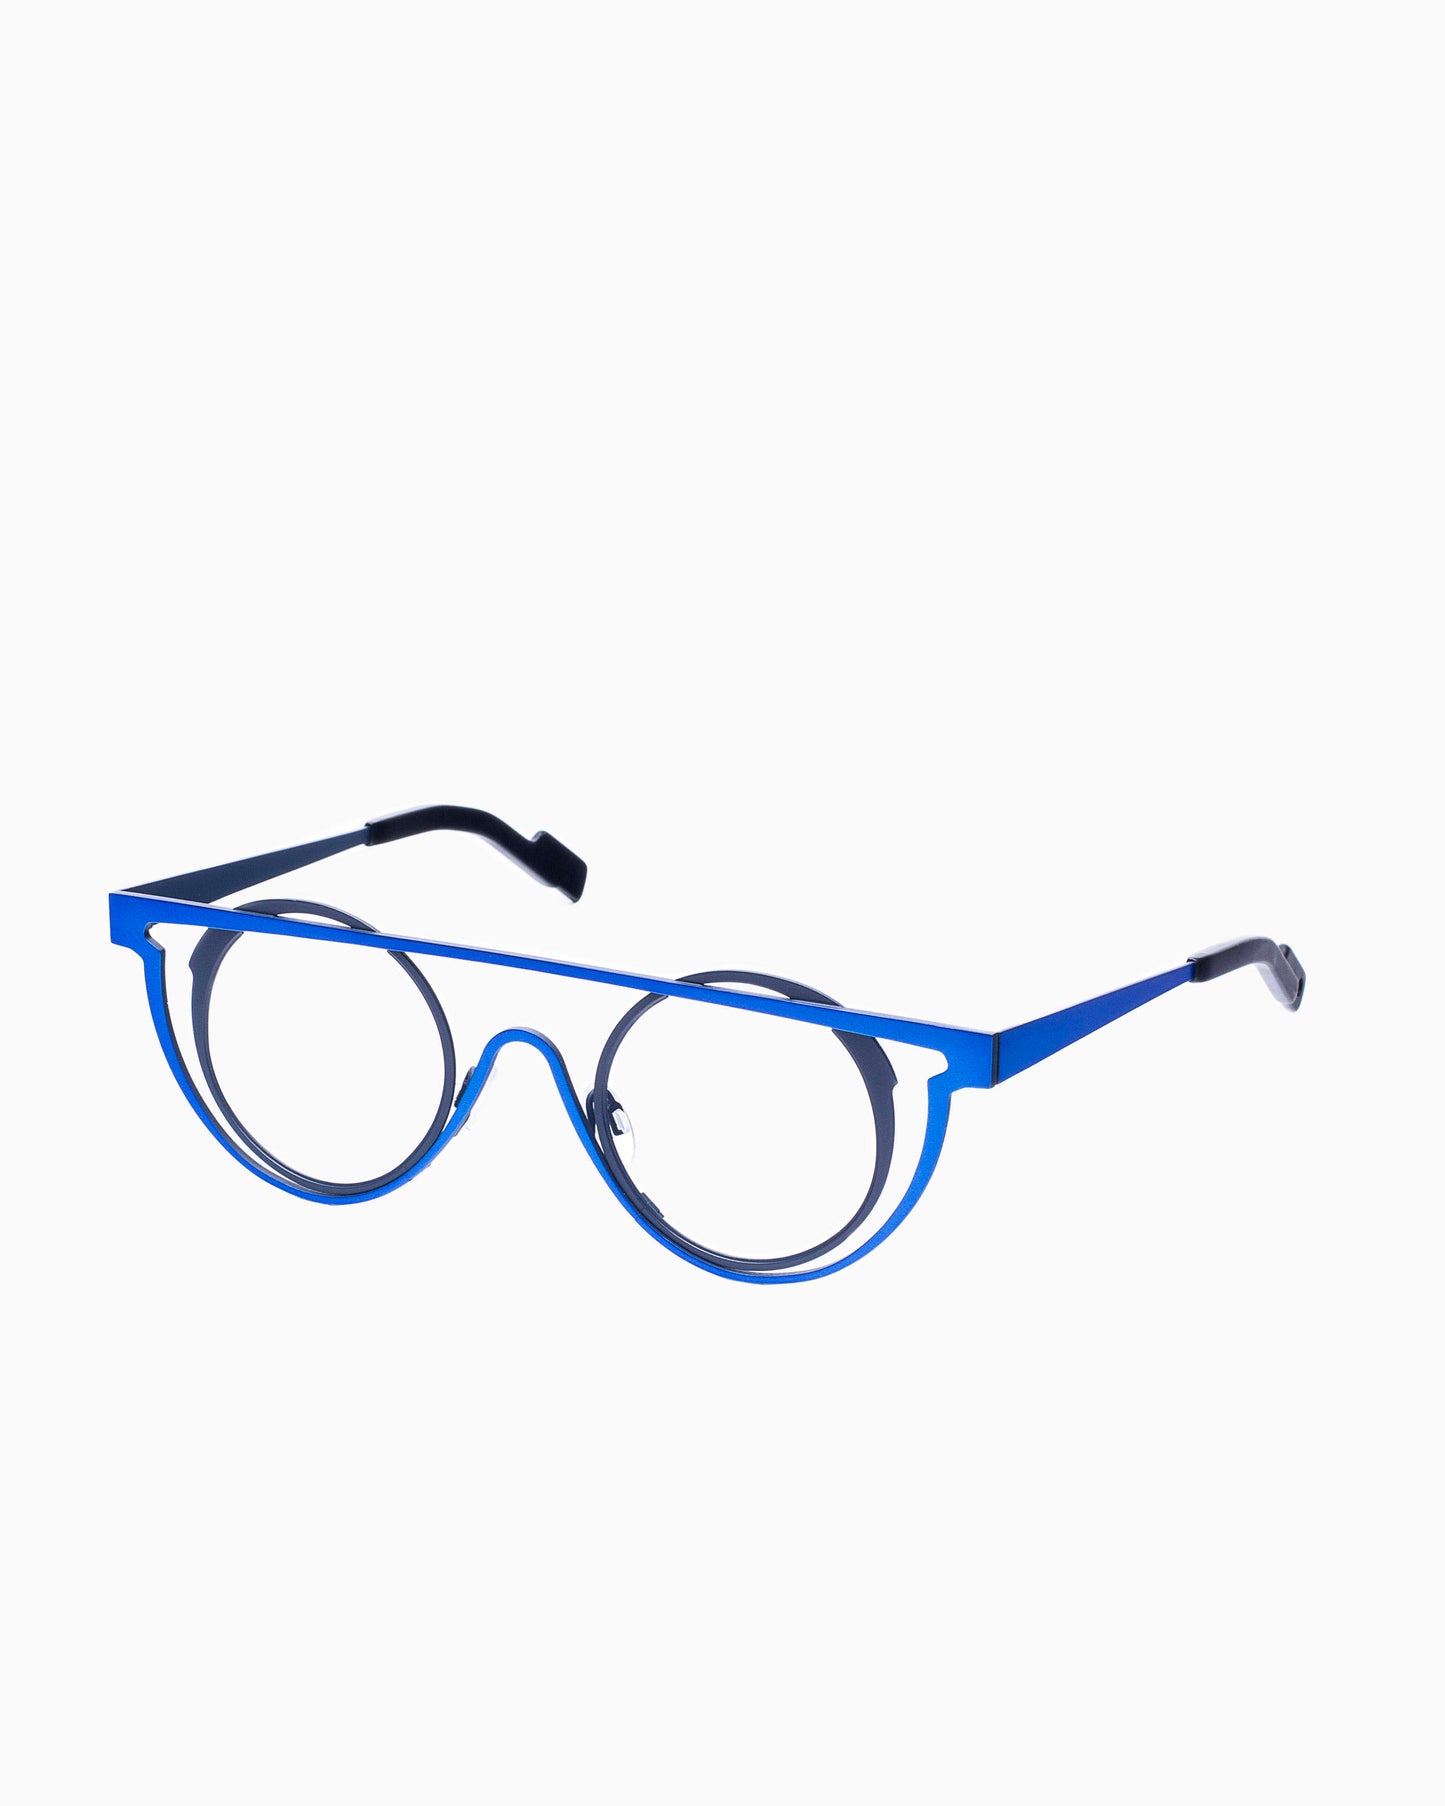 Theo - Sketch - 374 | glasses bar